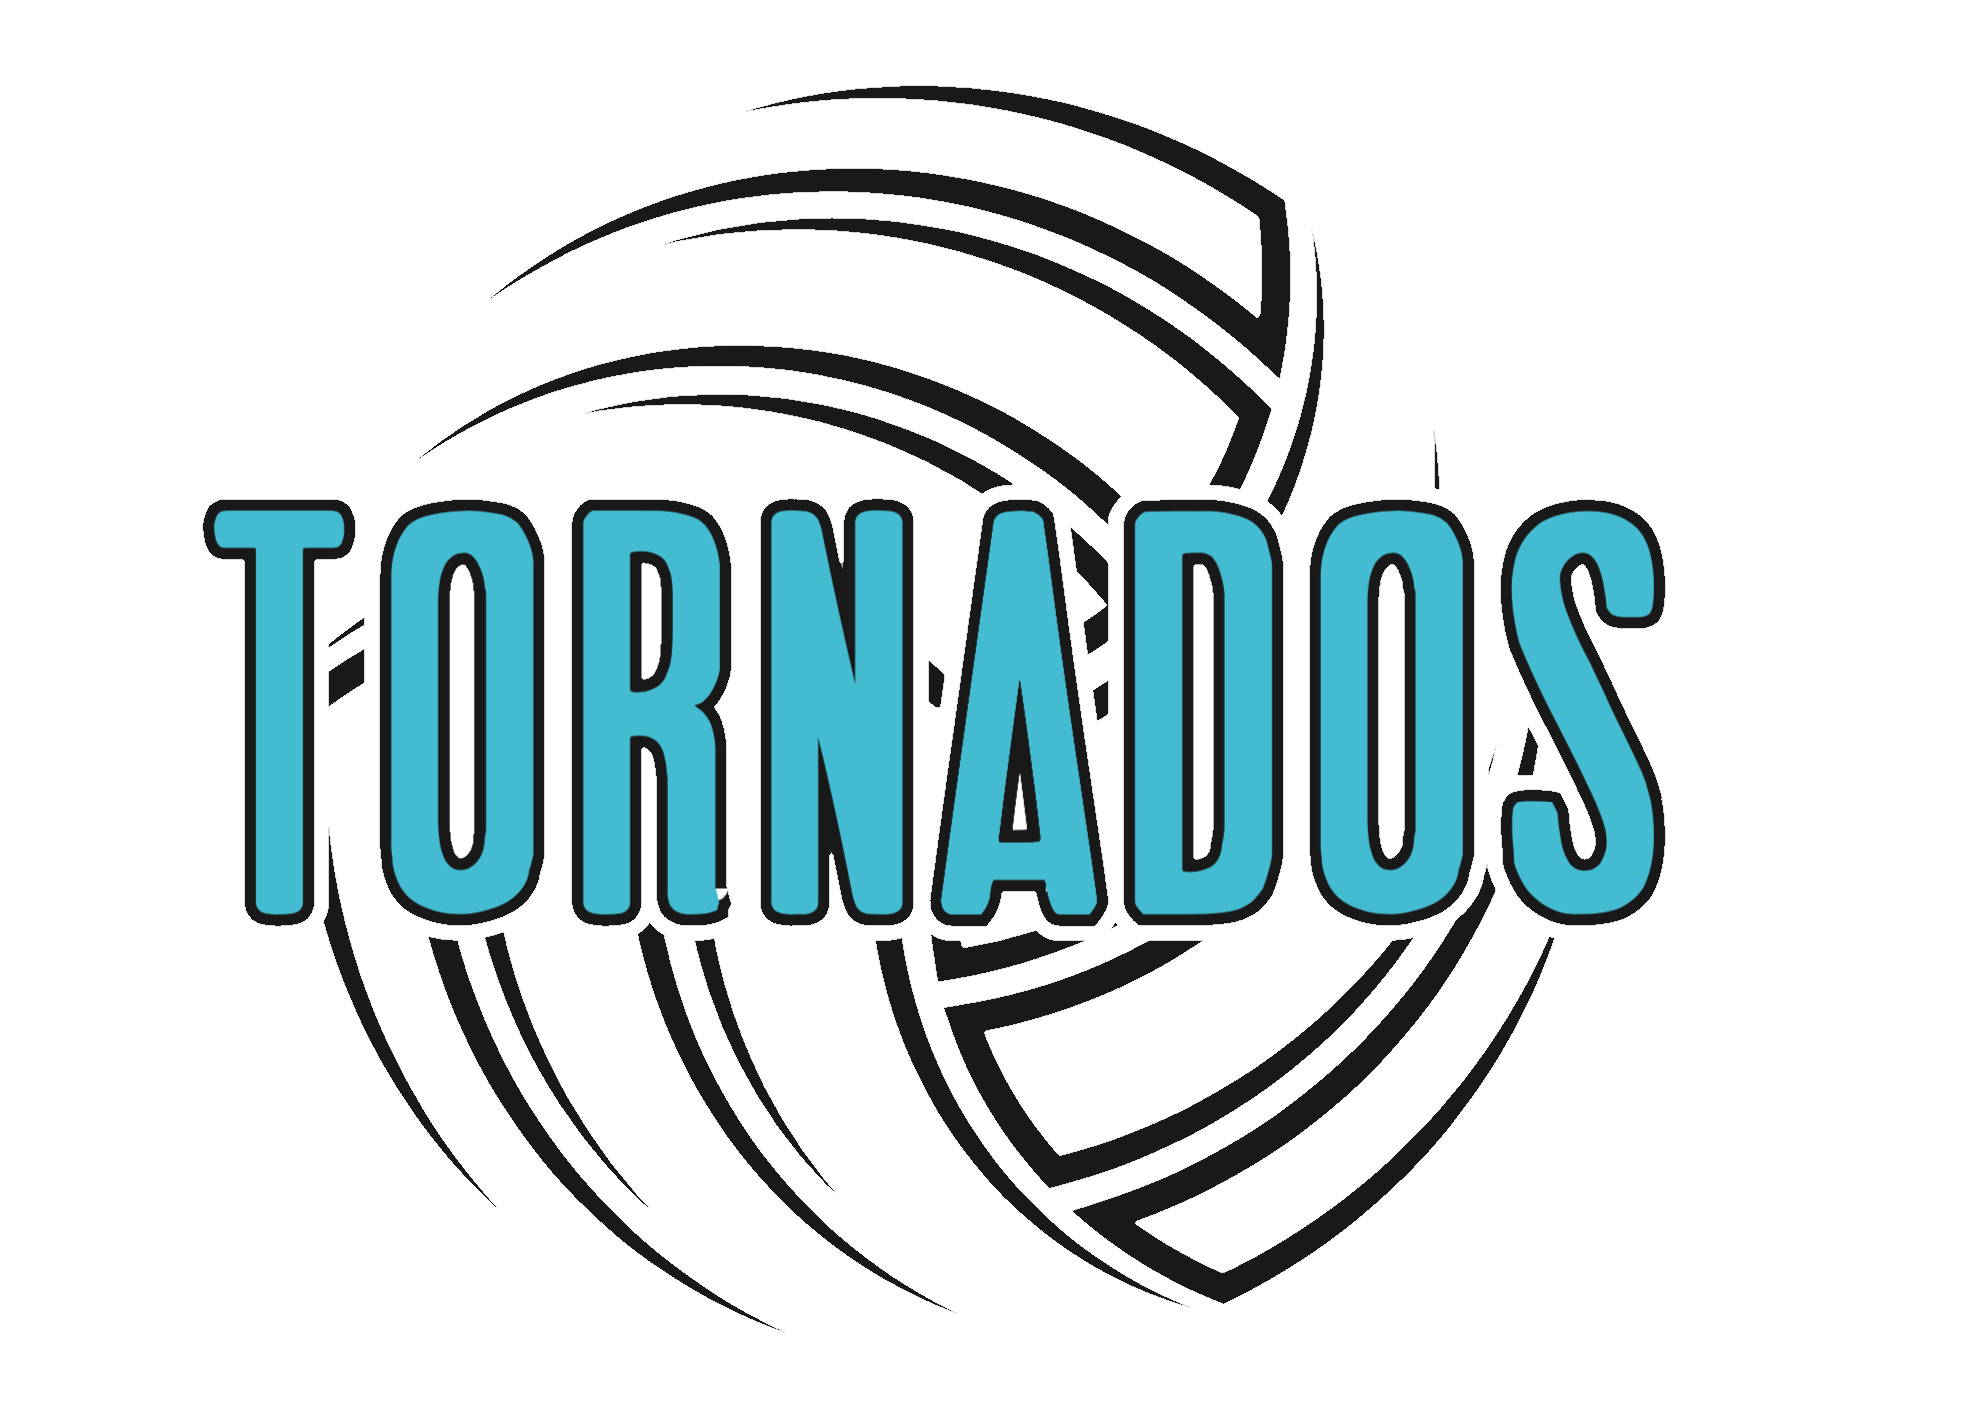 Texas Tornados Volleyball